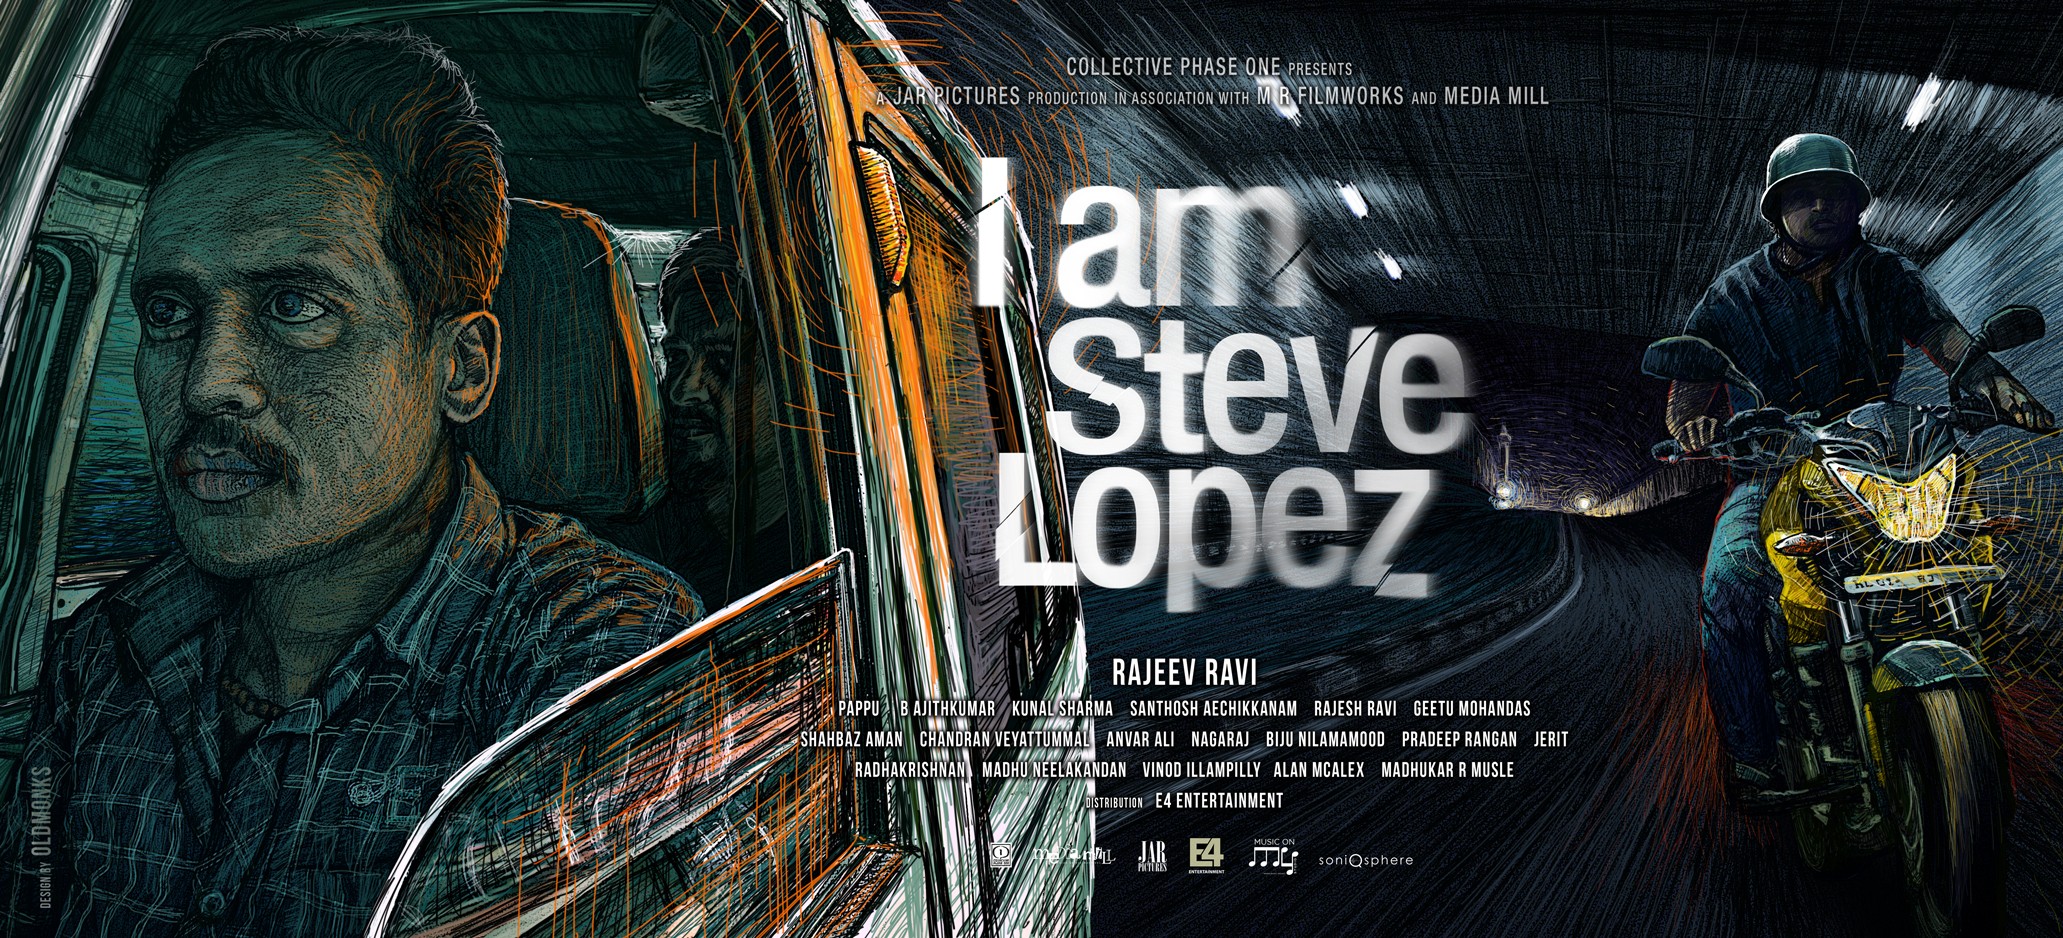 Mega Sized Movie Poster Image for Njan Steve Lopez (#5 of 7)